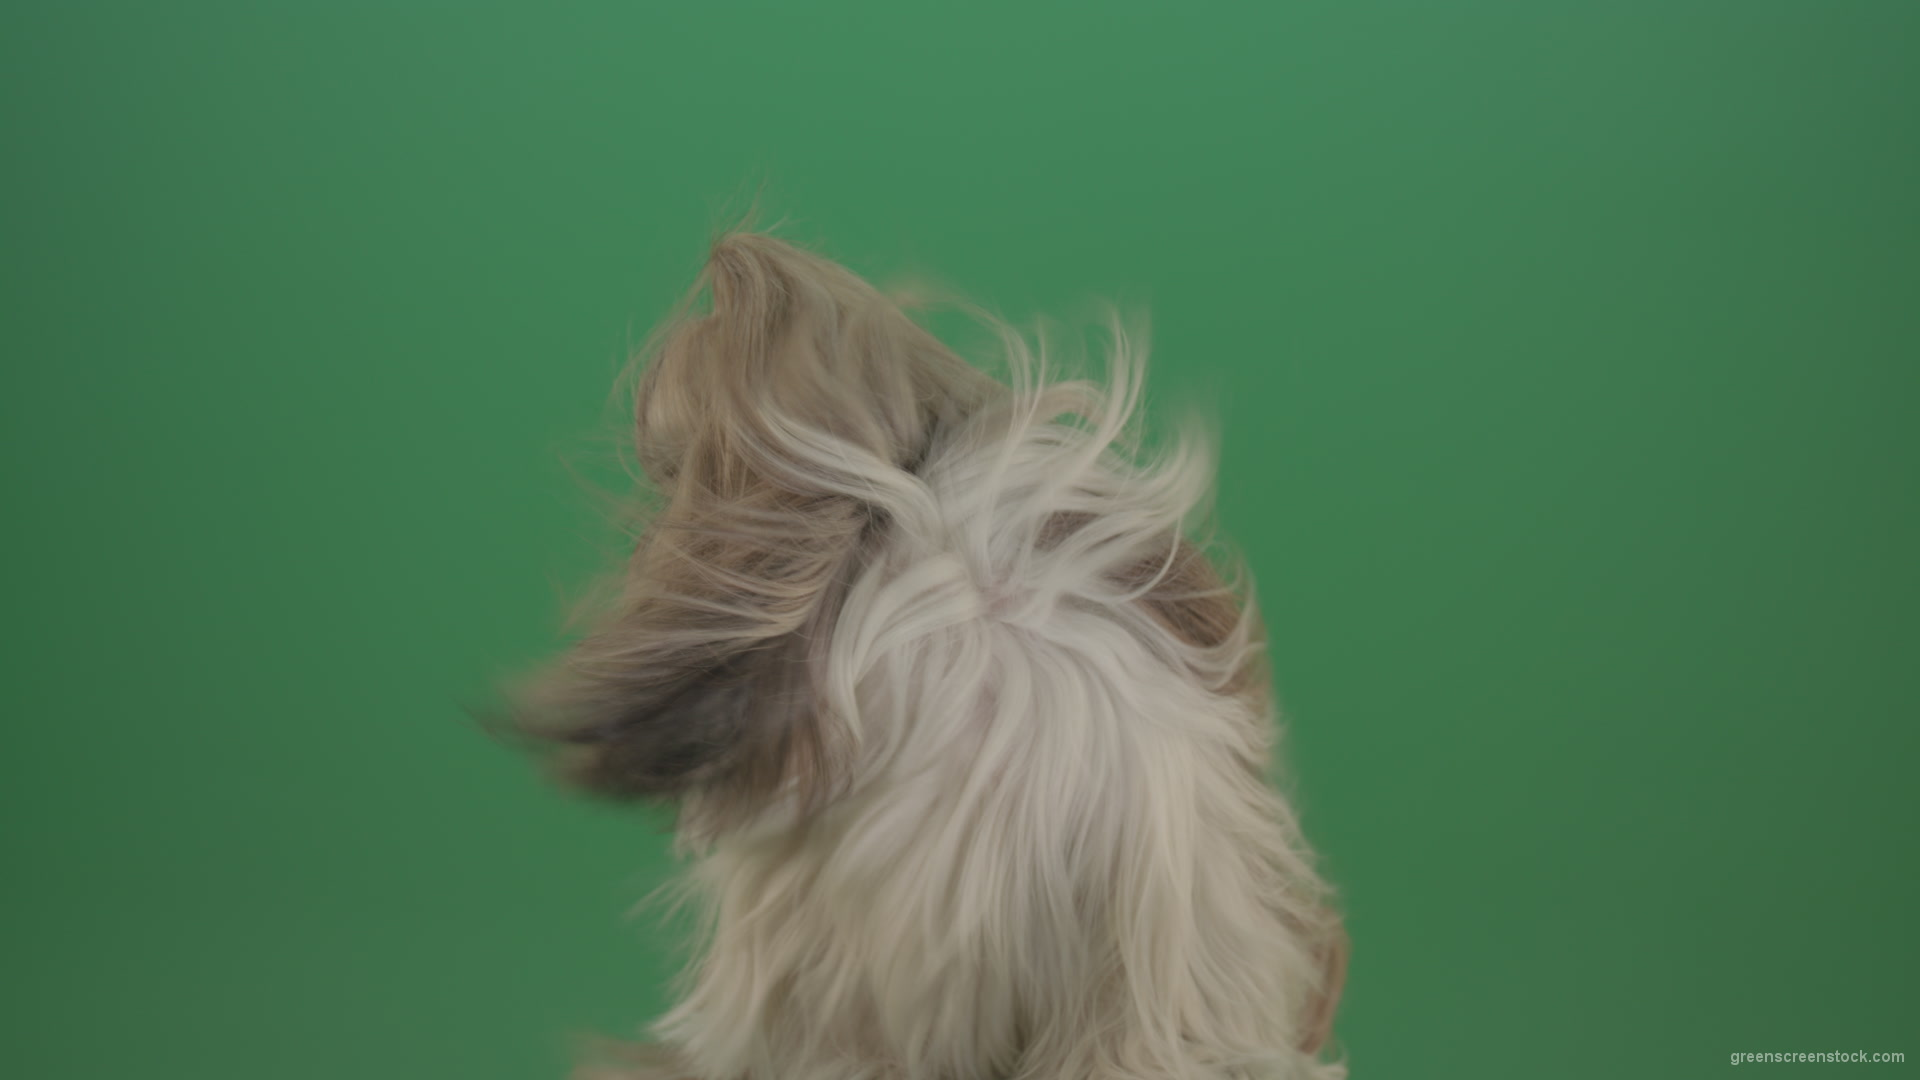 Fashion-long-hair-Shihtzu-dog-in-wind-turbulence-hairstyle-isolated-on-green-screen_002 Green Screen Stock